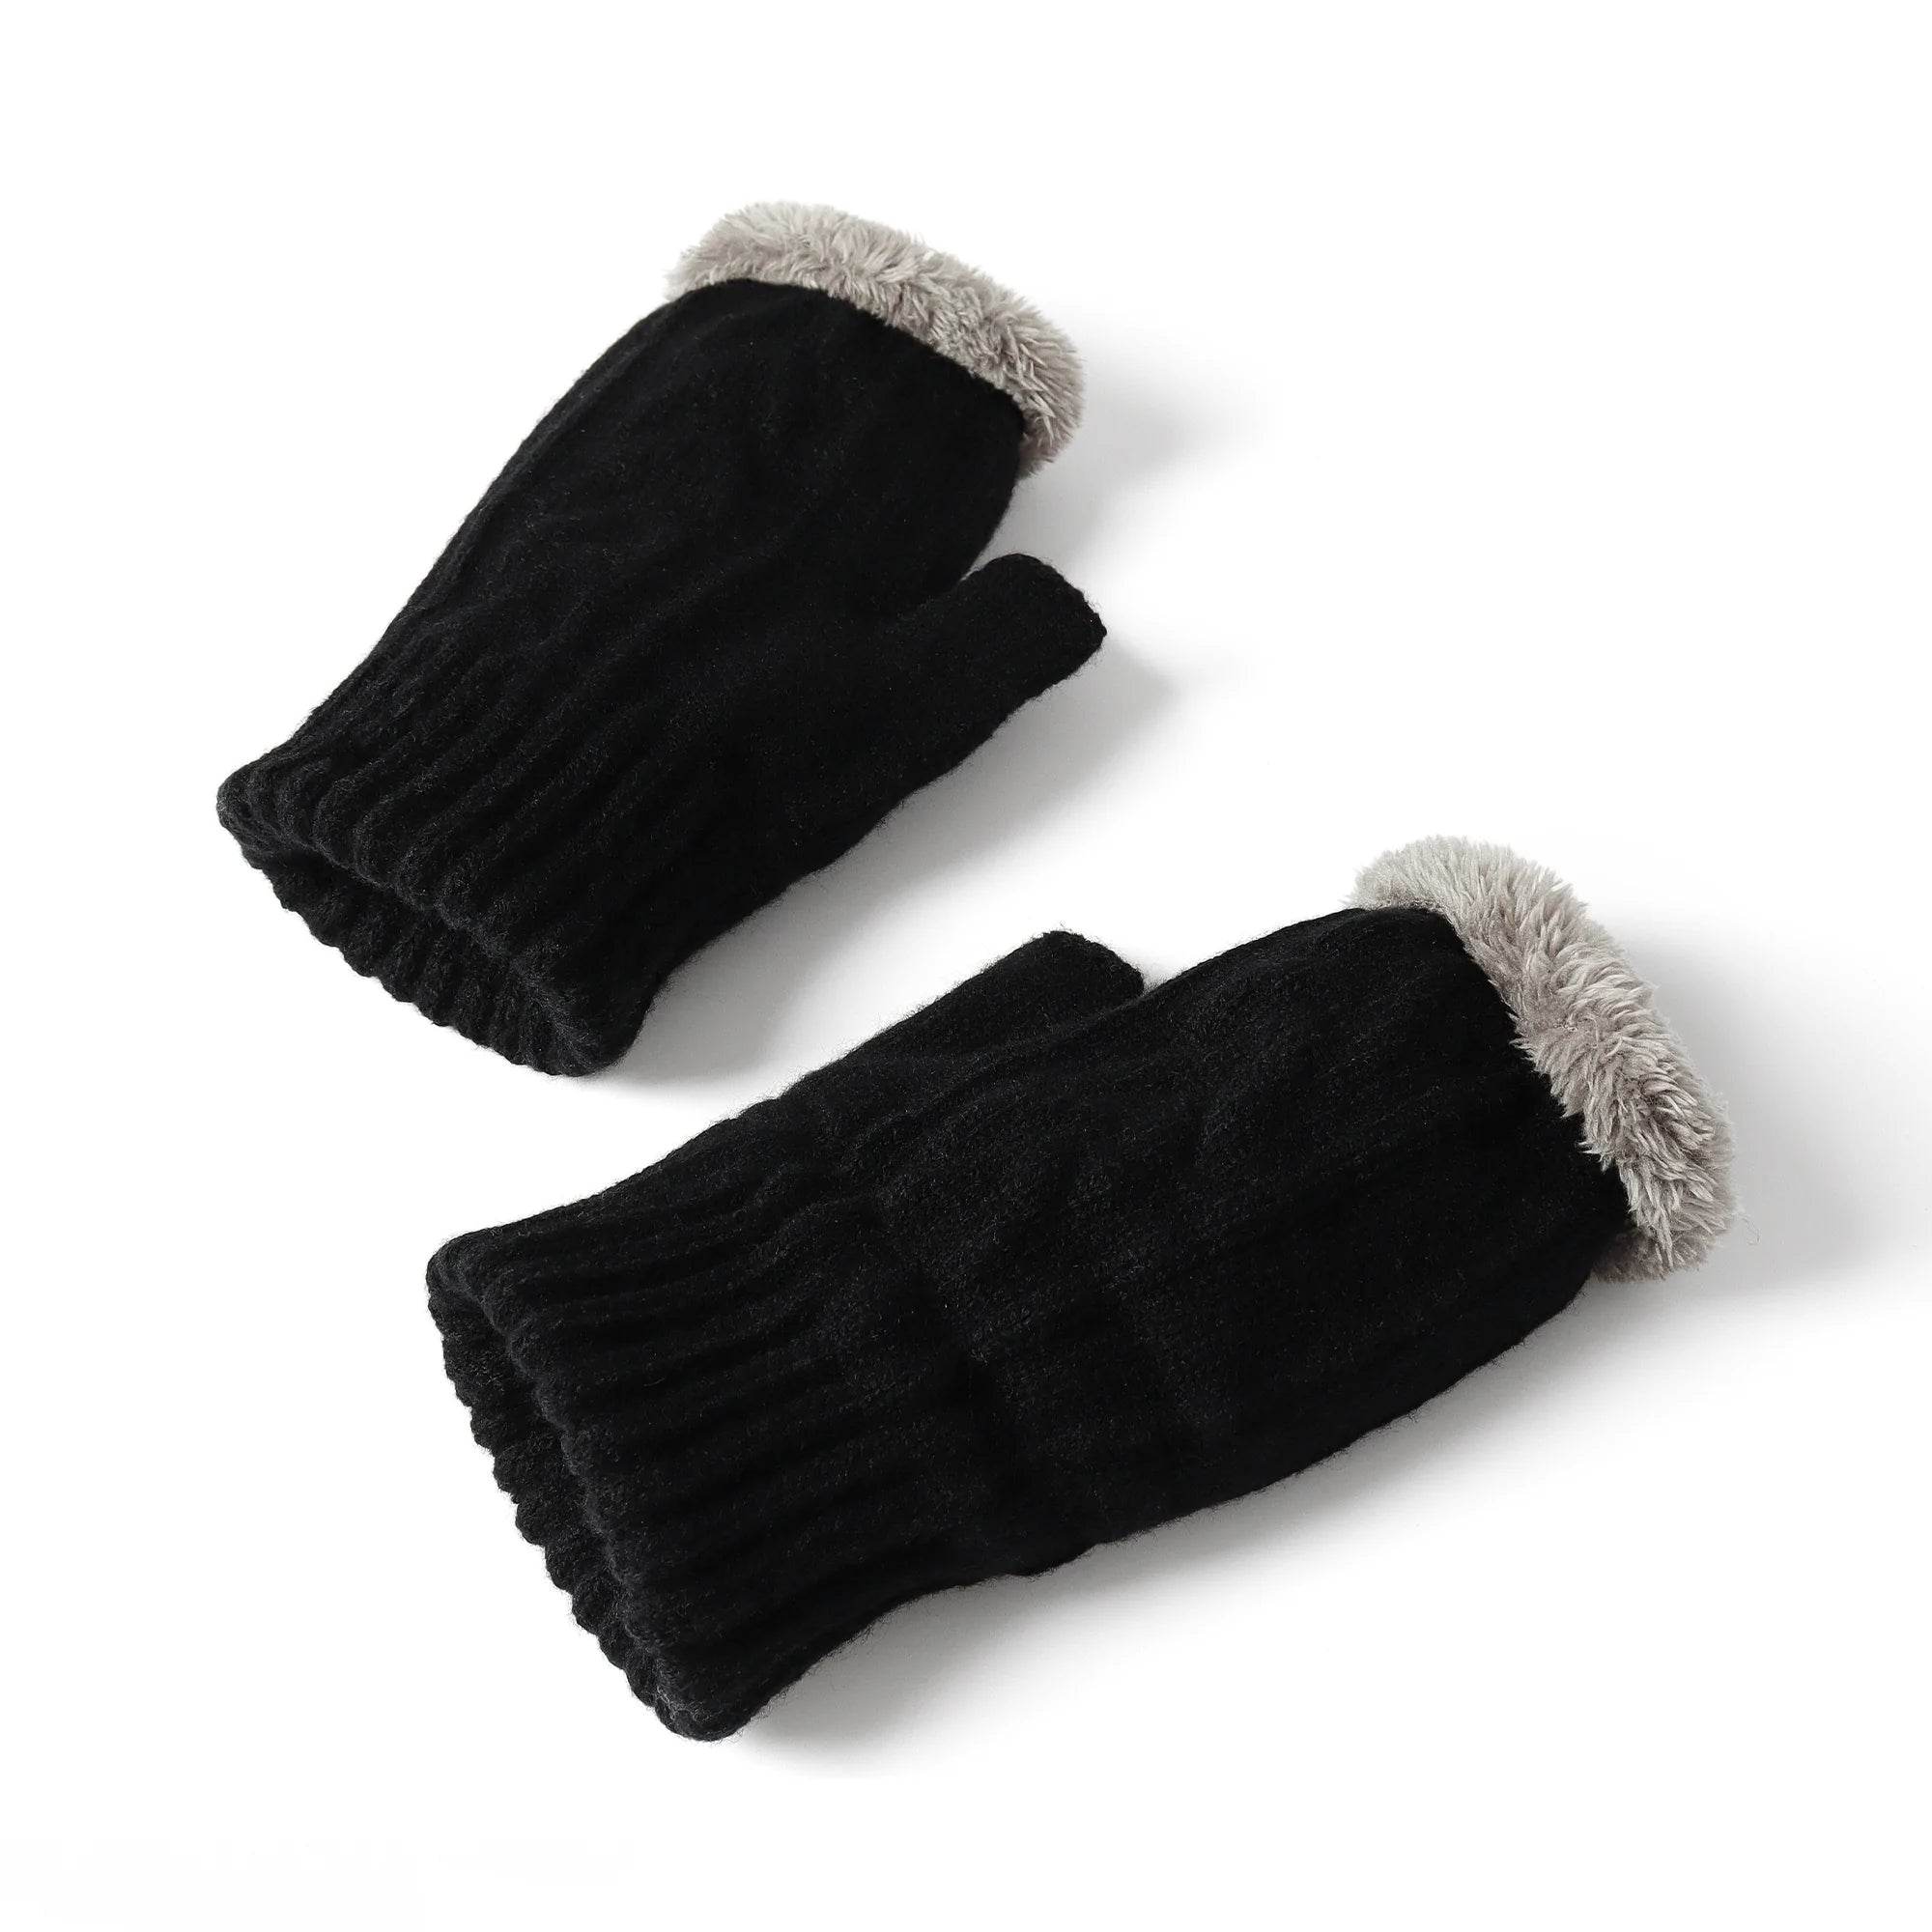  - Fingerless Ultra Plush Knit Gloves - Original UGG Australia Classic